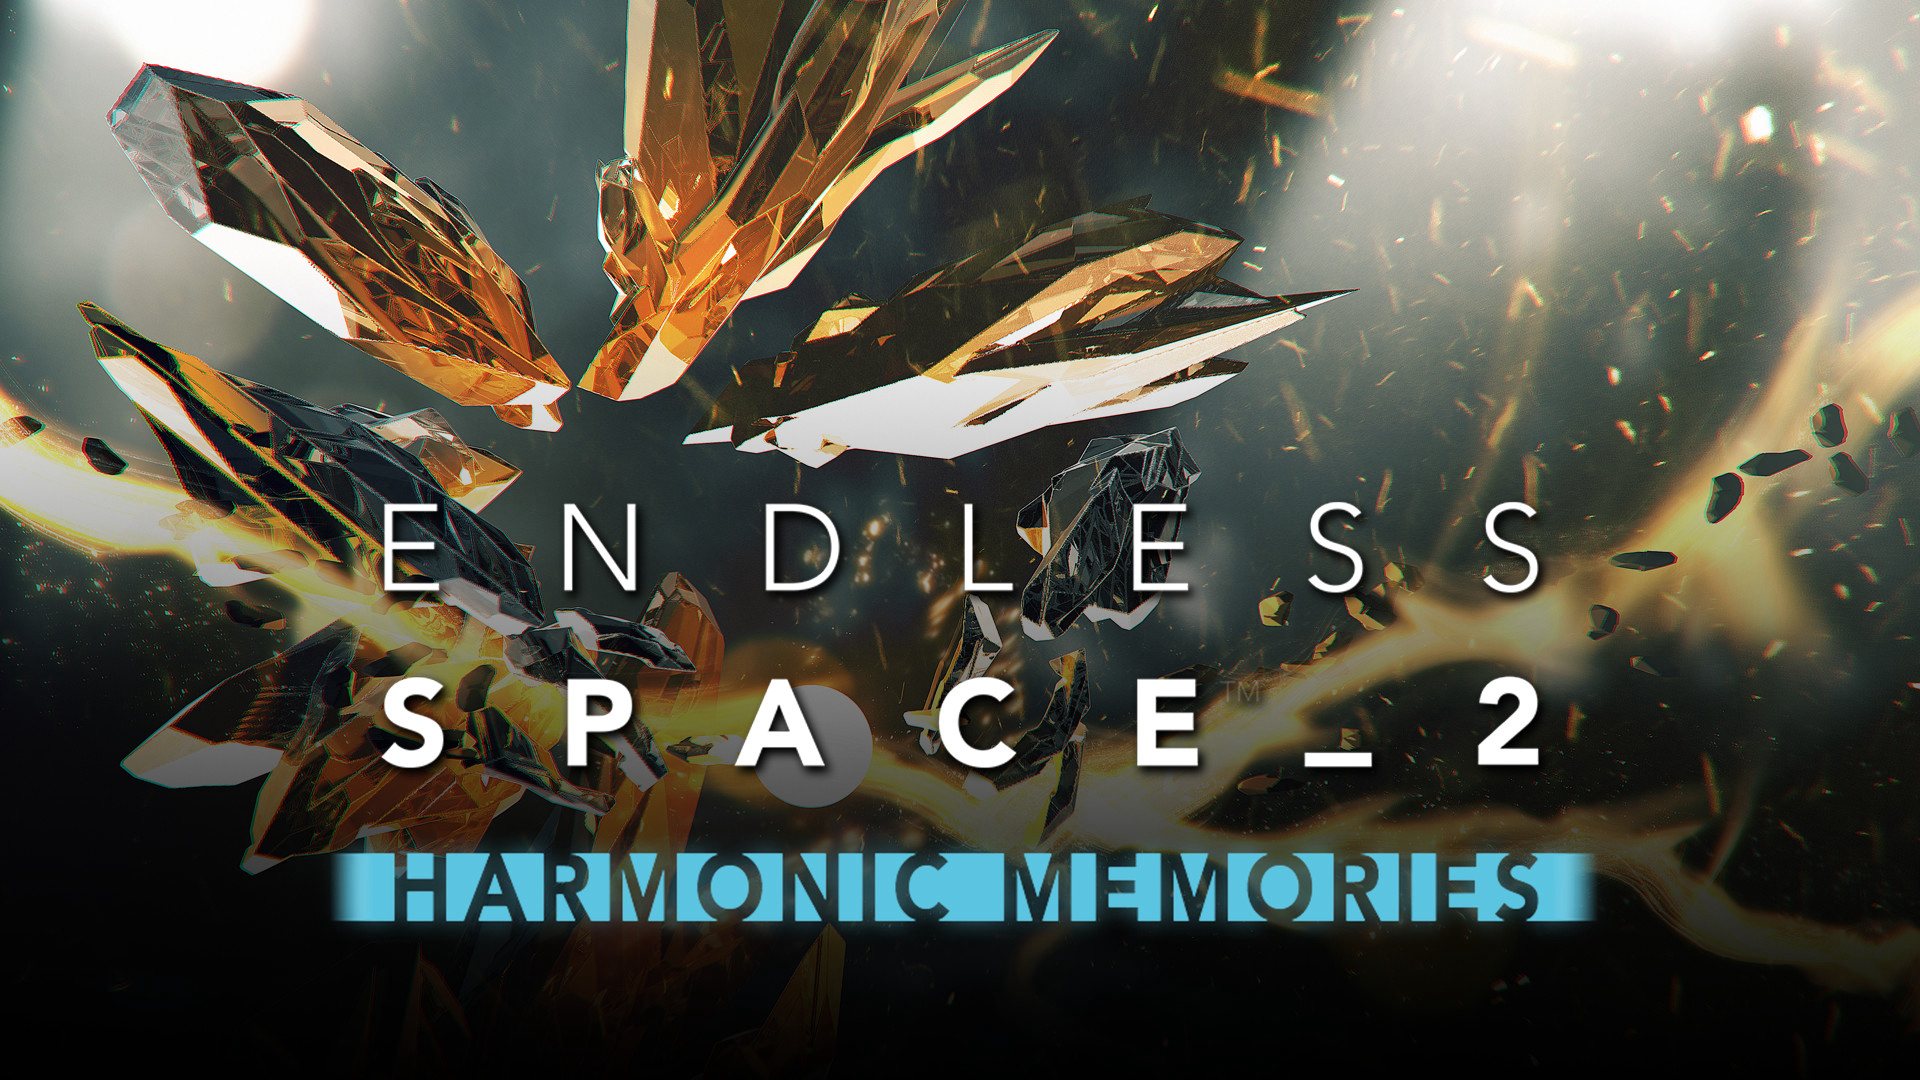 Endless Space 2 - Harmonic Memories DLC Steam CD Key USD 1.45